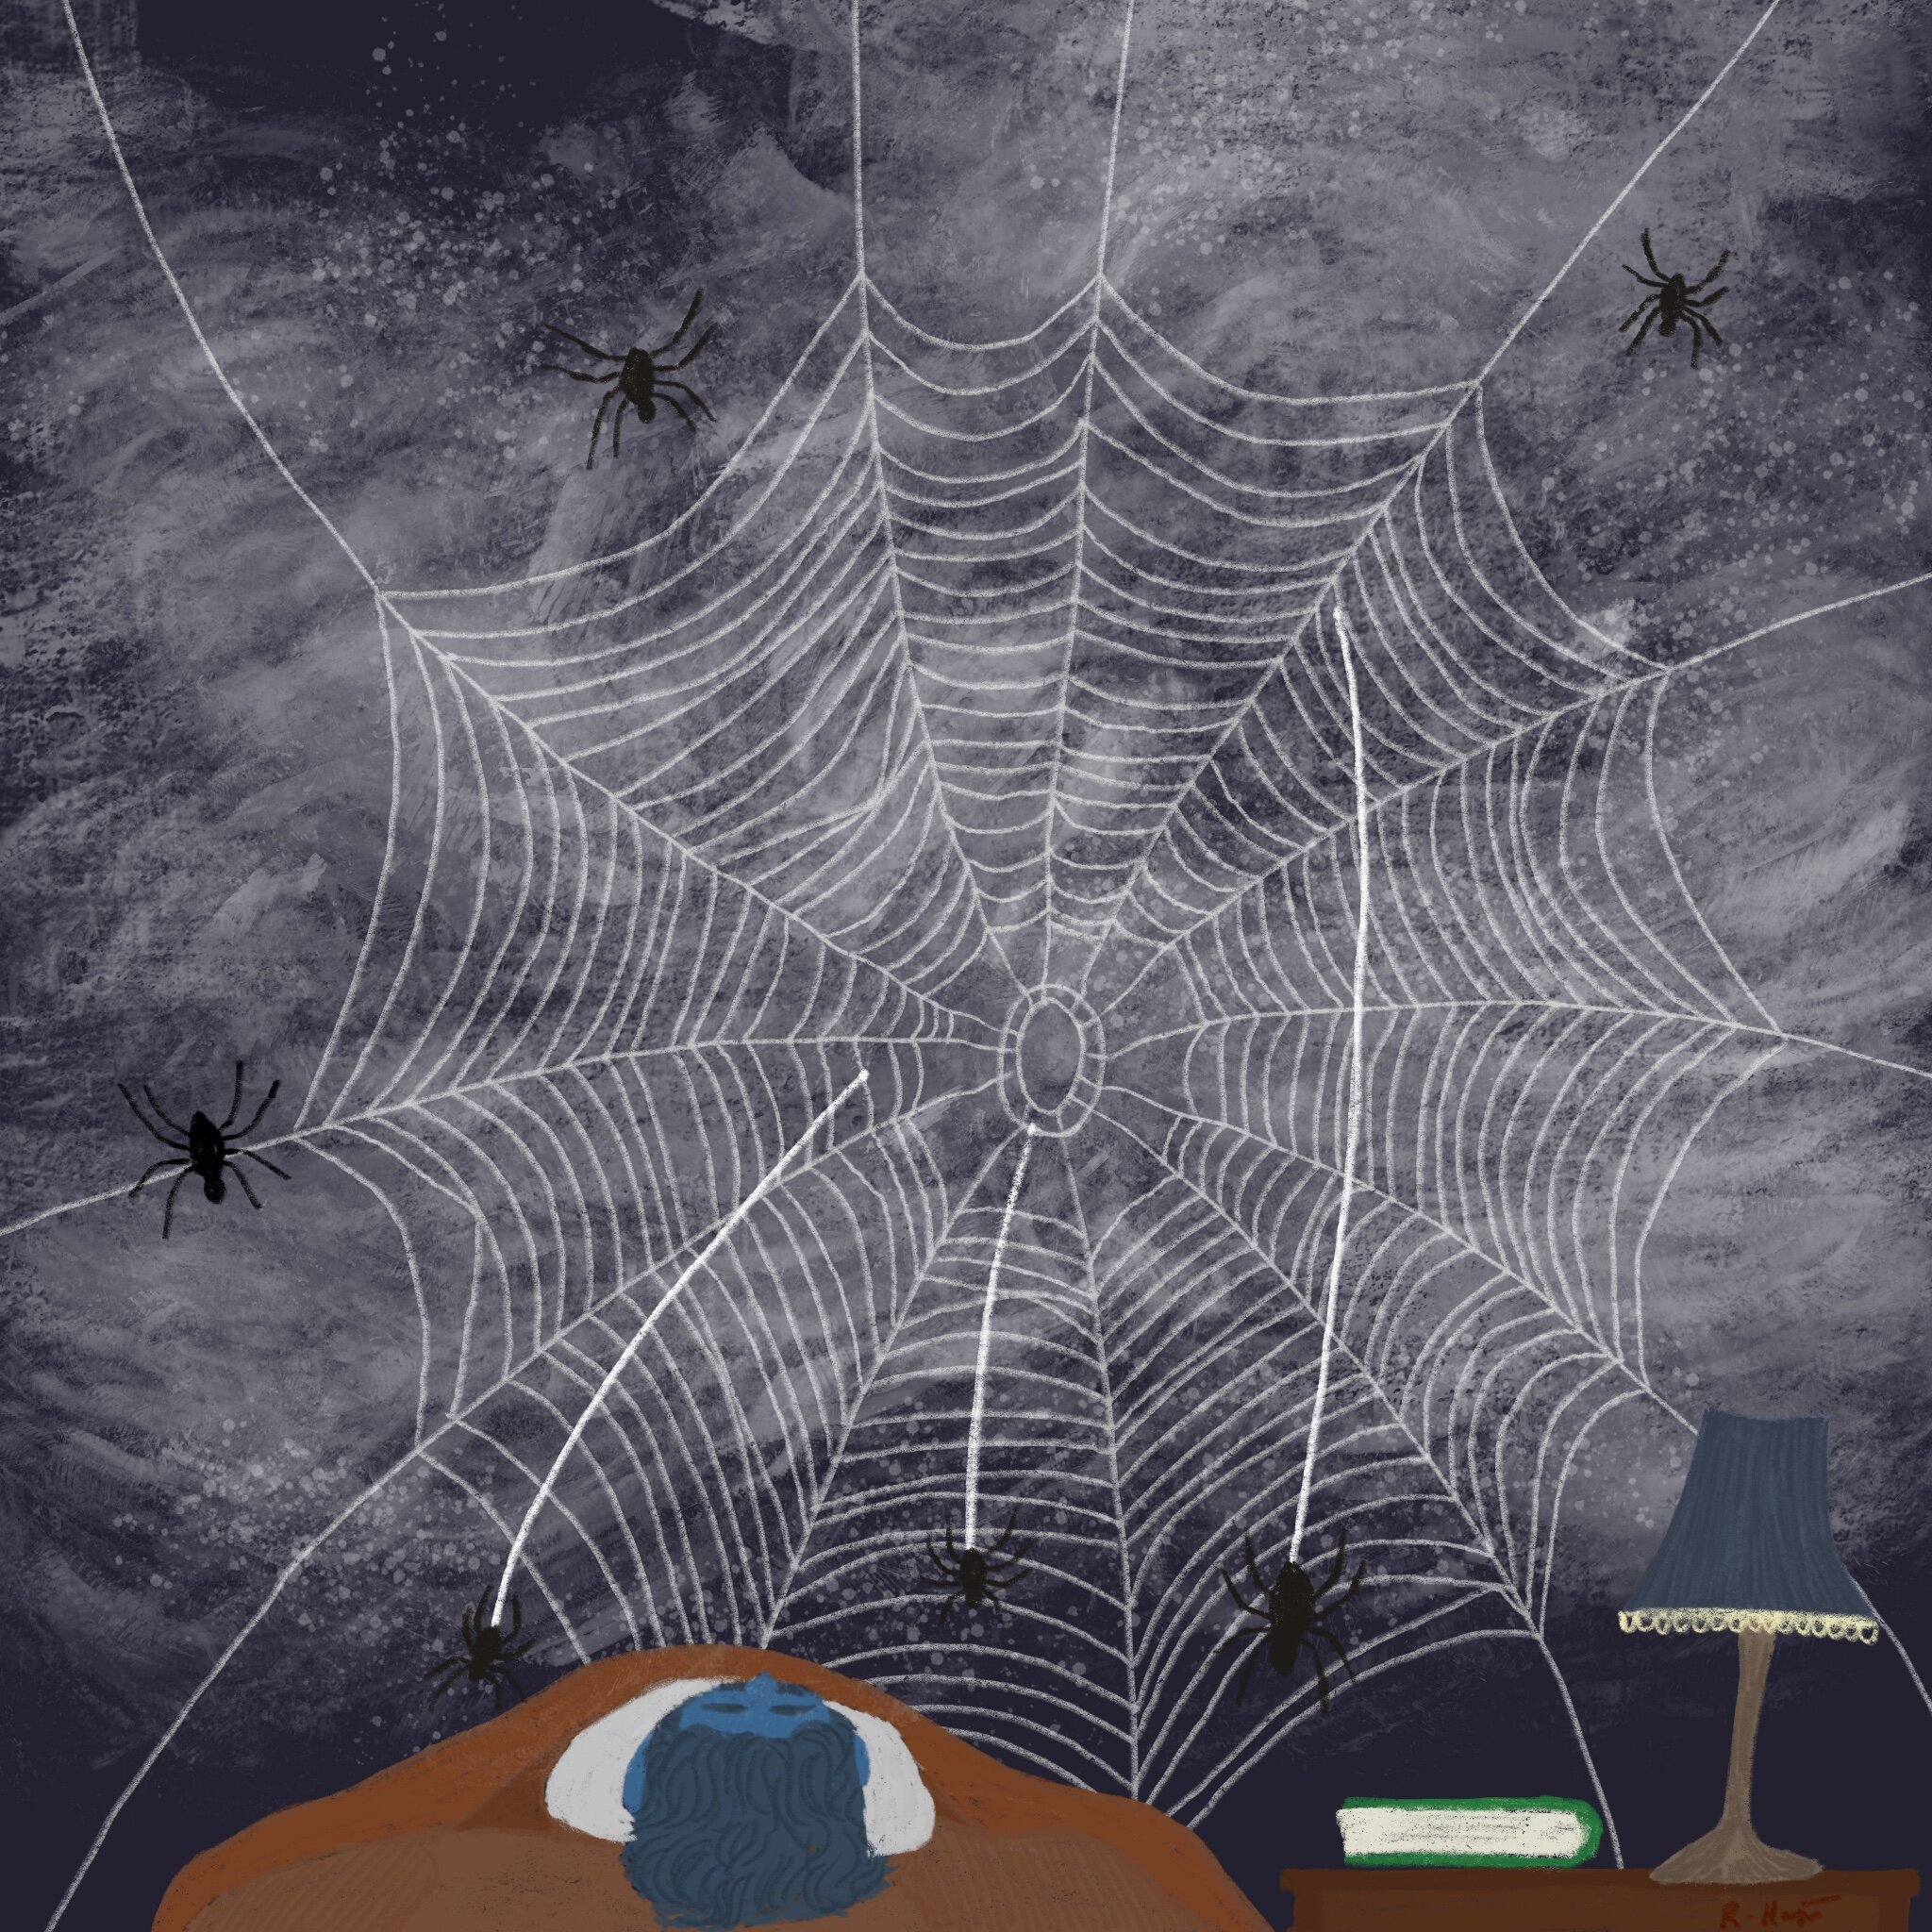 Spider Ring by Tristen Pasternak